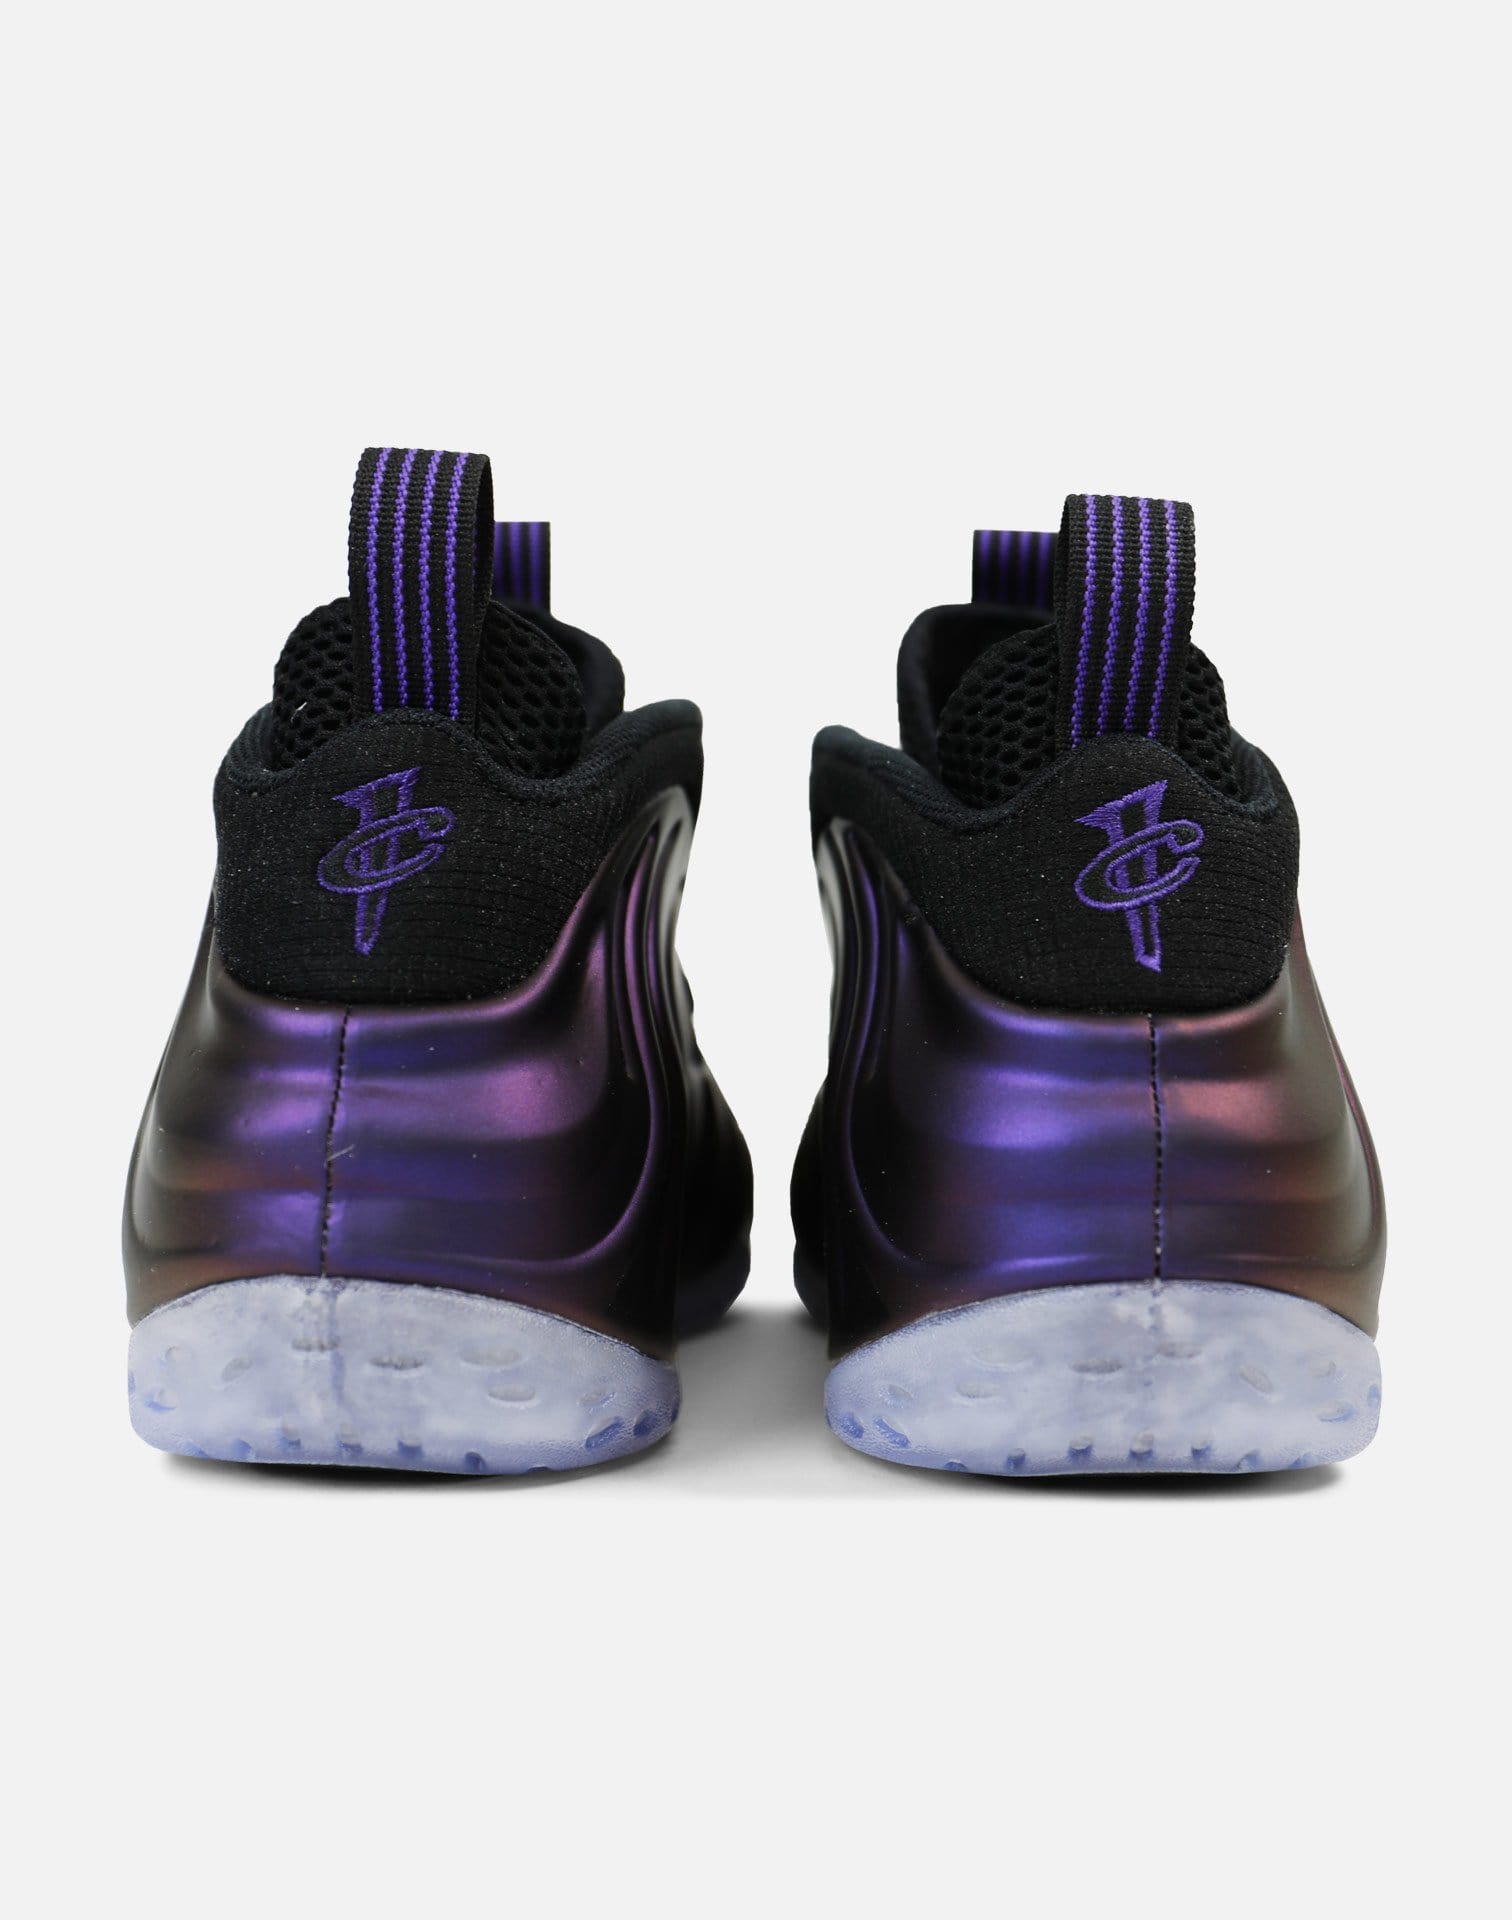 Nike Air Foamposite One 'Eggplant' (Black/Varsity Purple)